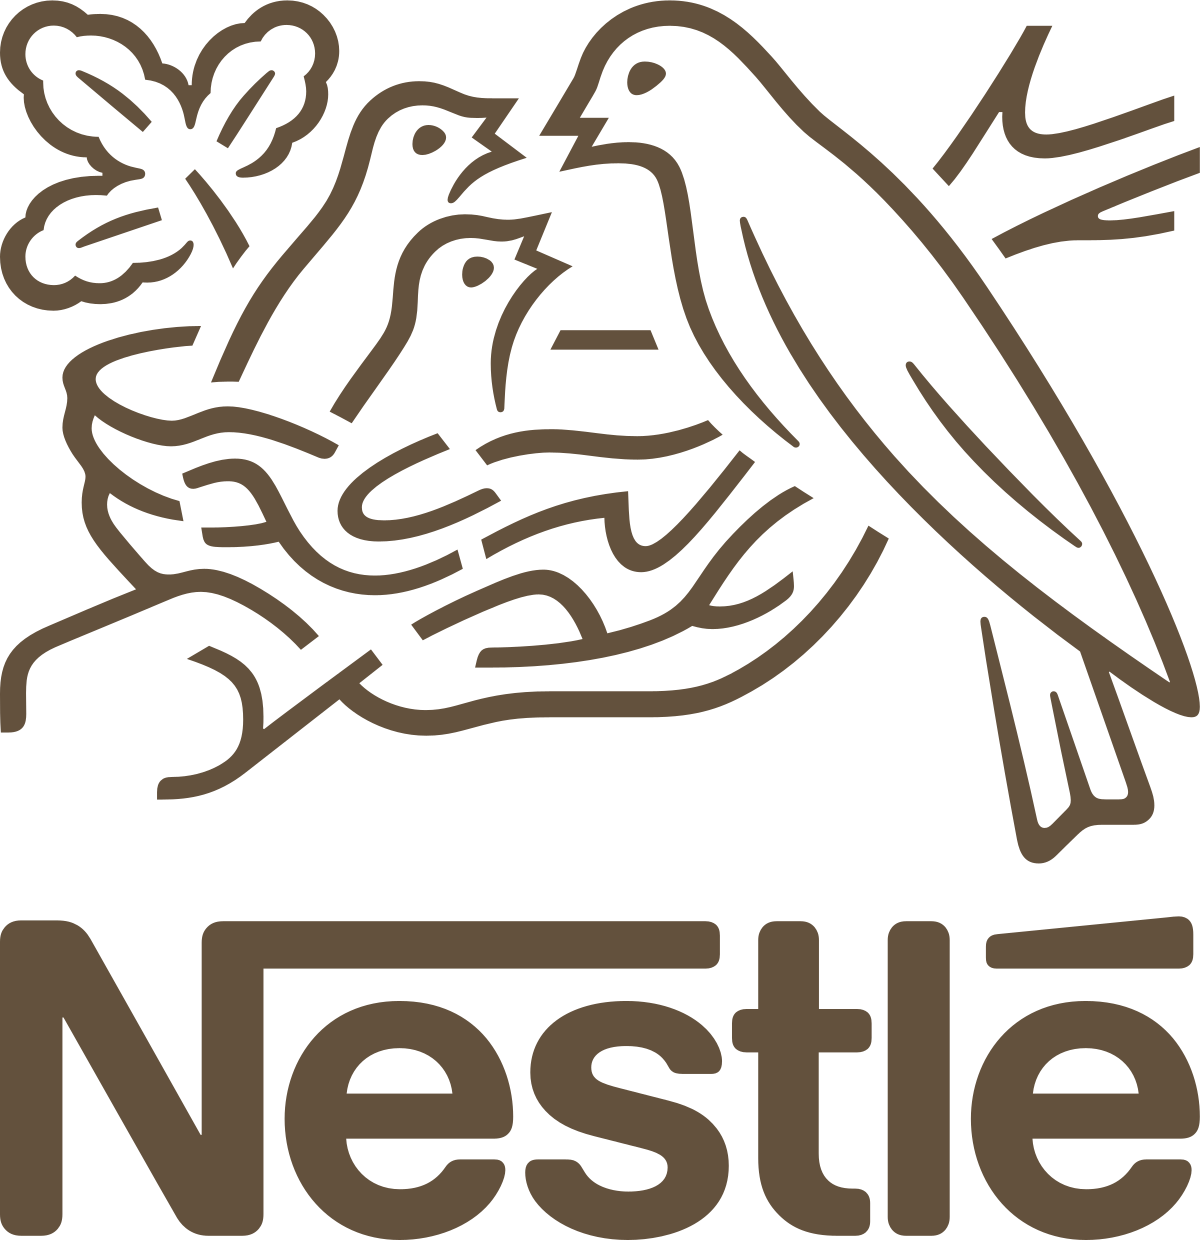 Nestlé - Wikipedia